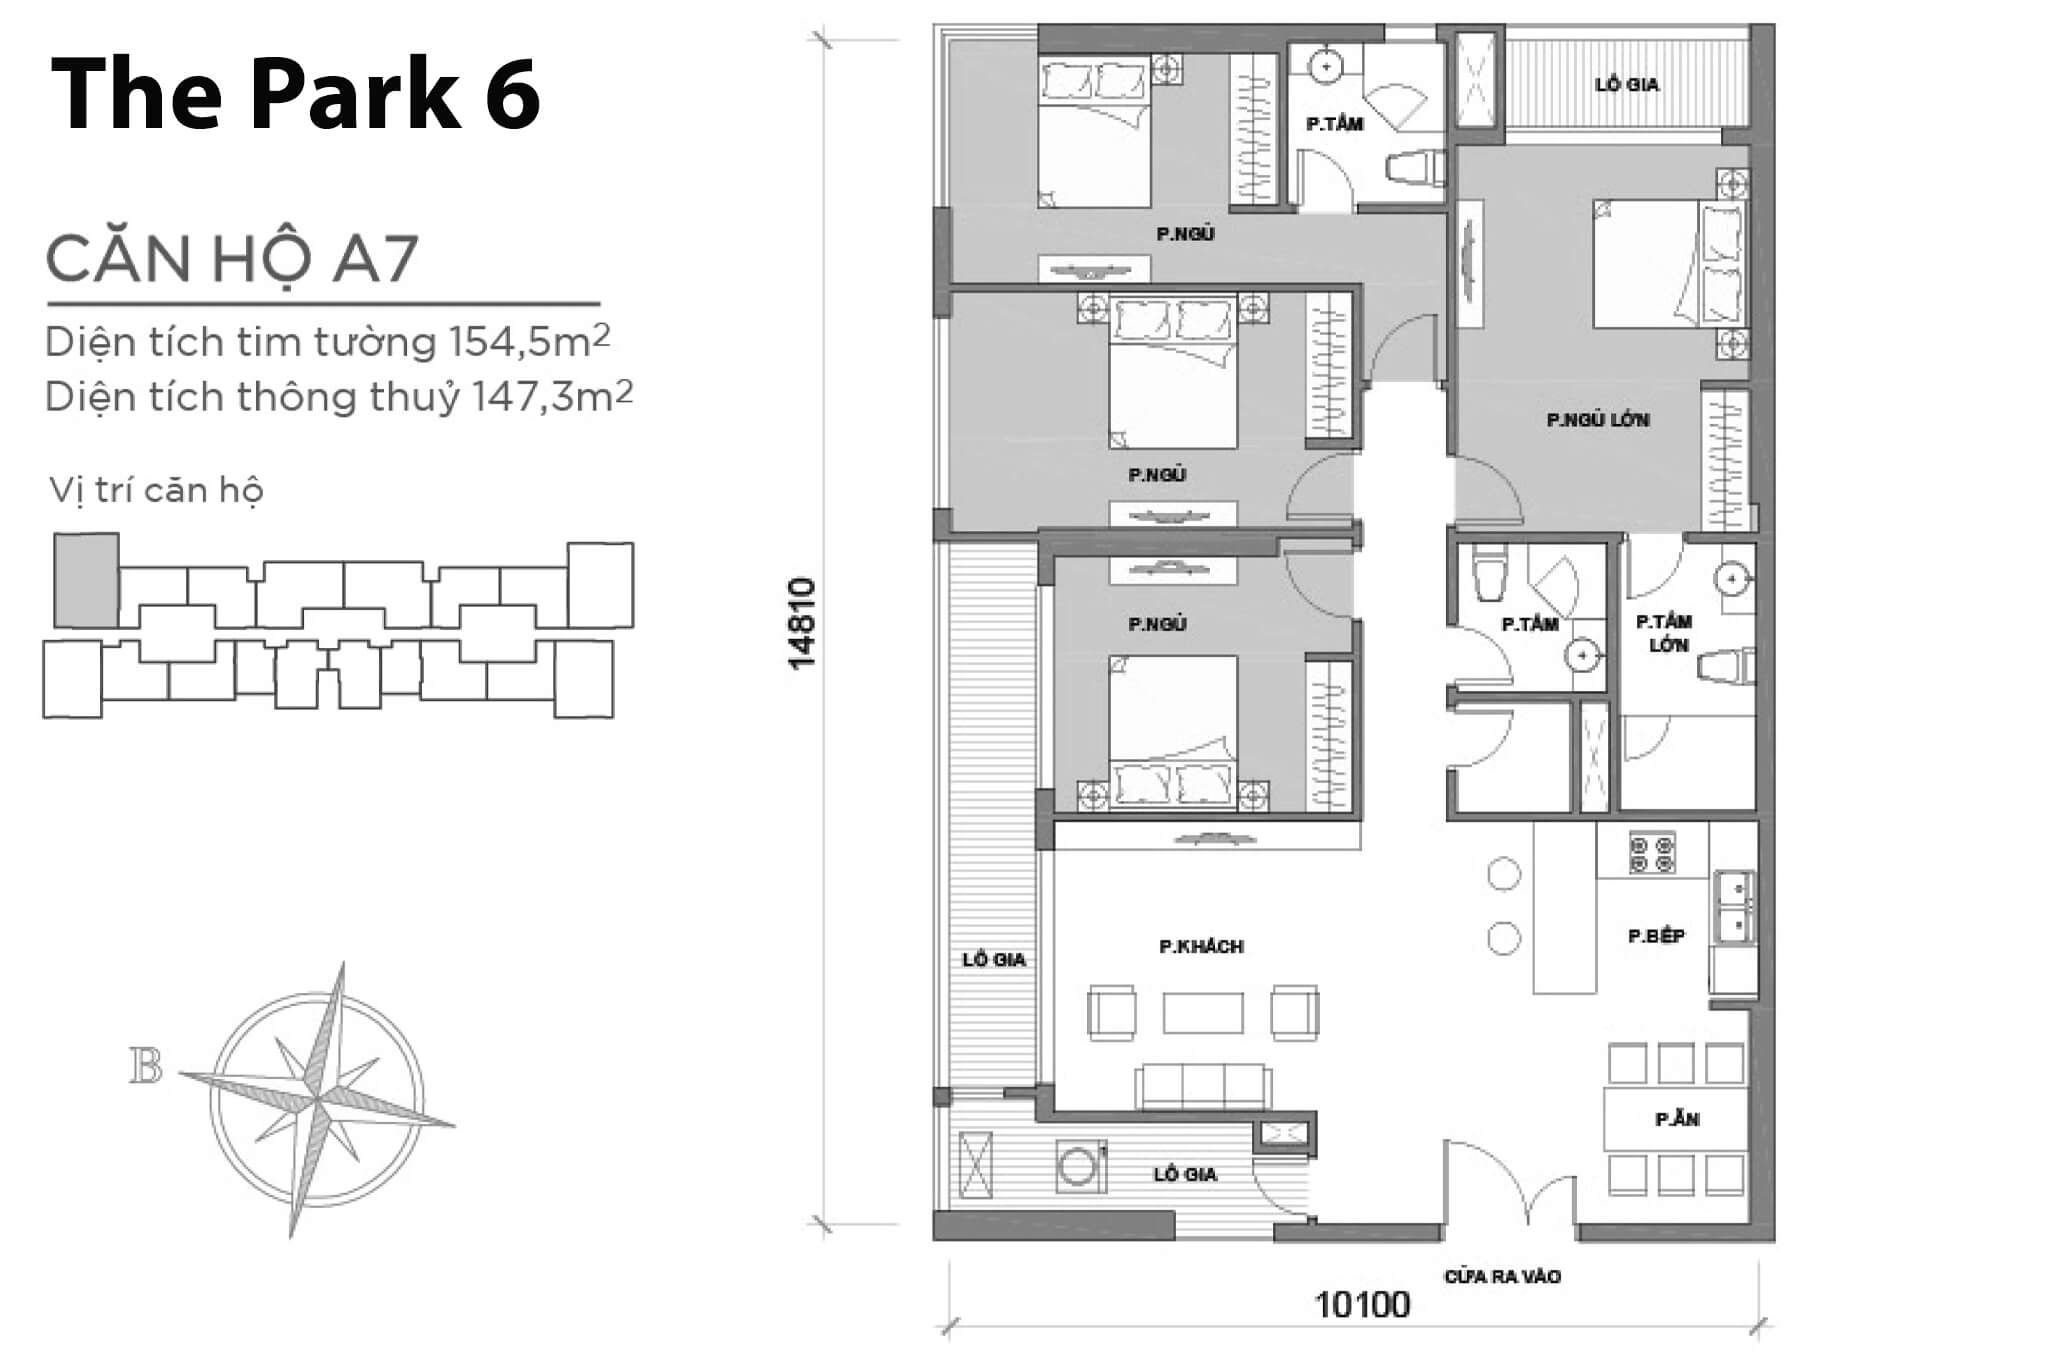 Layout căn hộ số 07 tòa The Park 6A - Mặt bằng Vinhomes Central Park